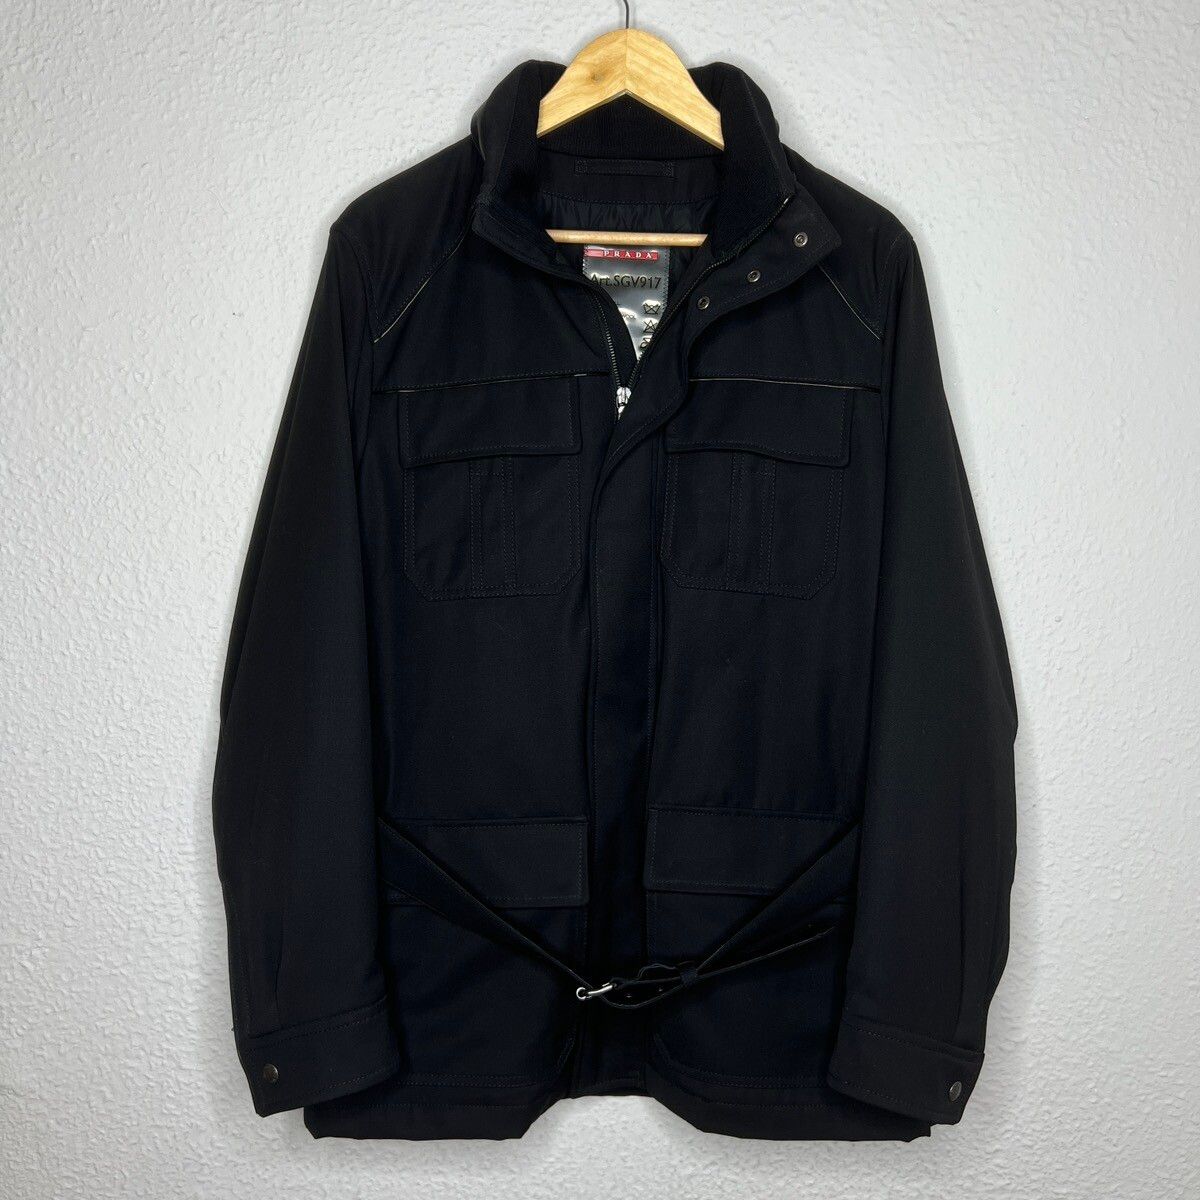 Prada Prada Milano Military Jacket Belted Coat Black Wool Designer Size US M / EU 48-50 / 2 - 1 Preview